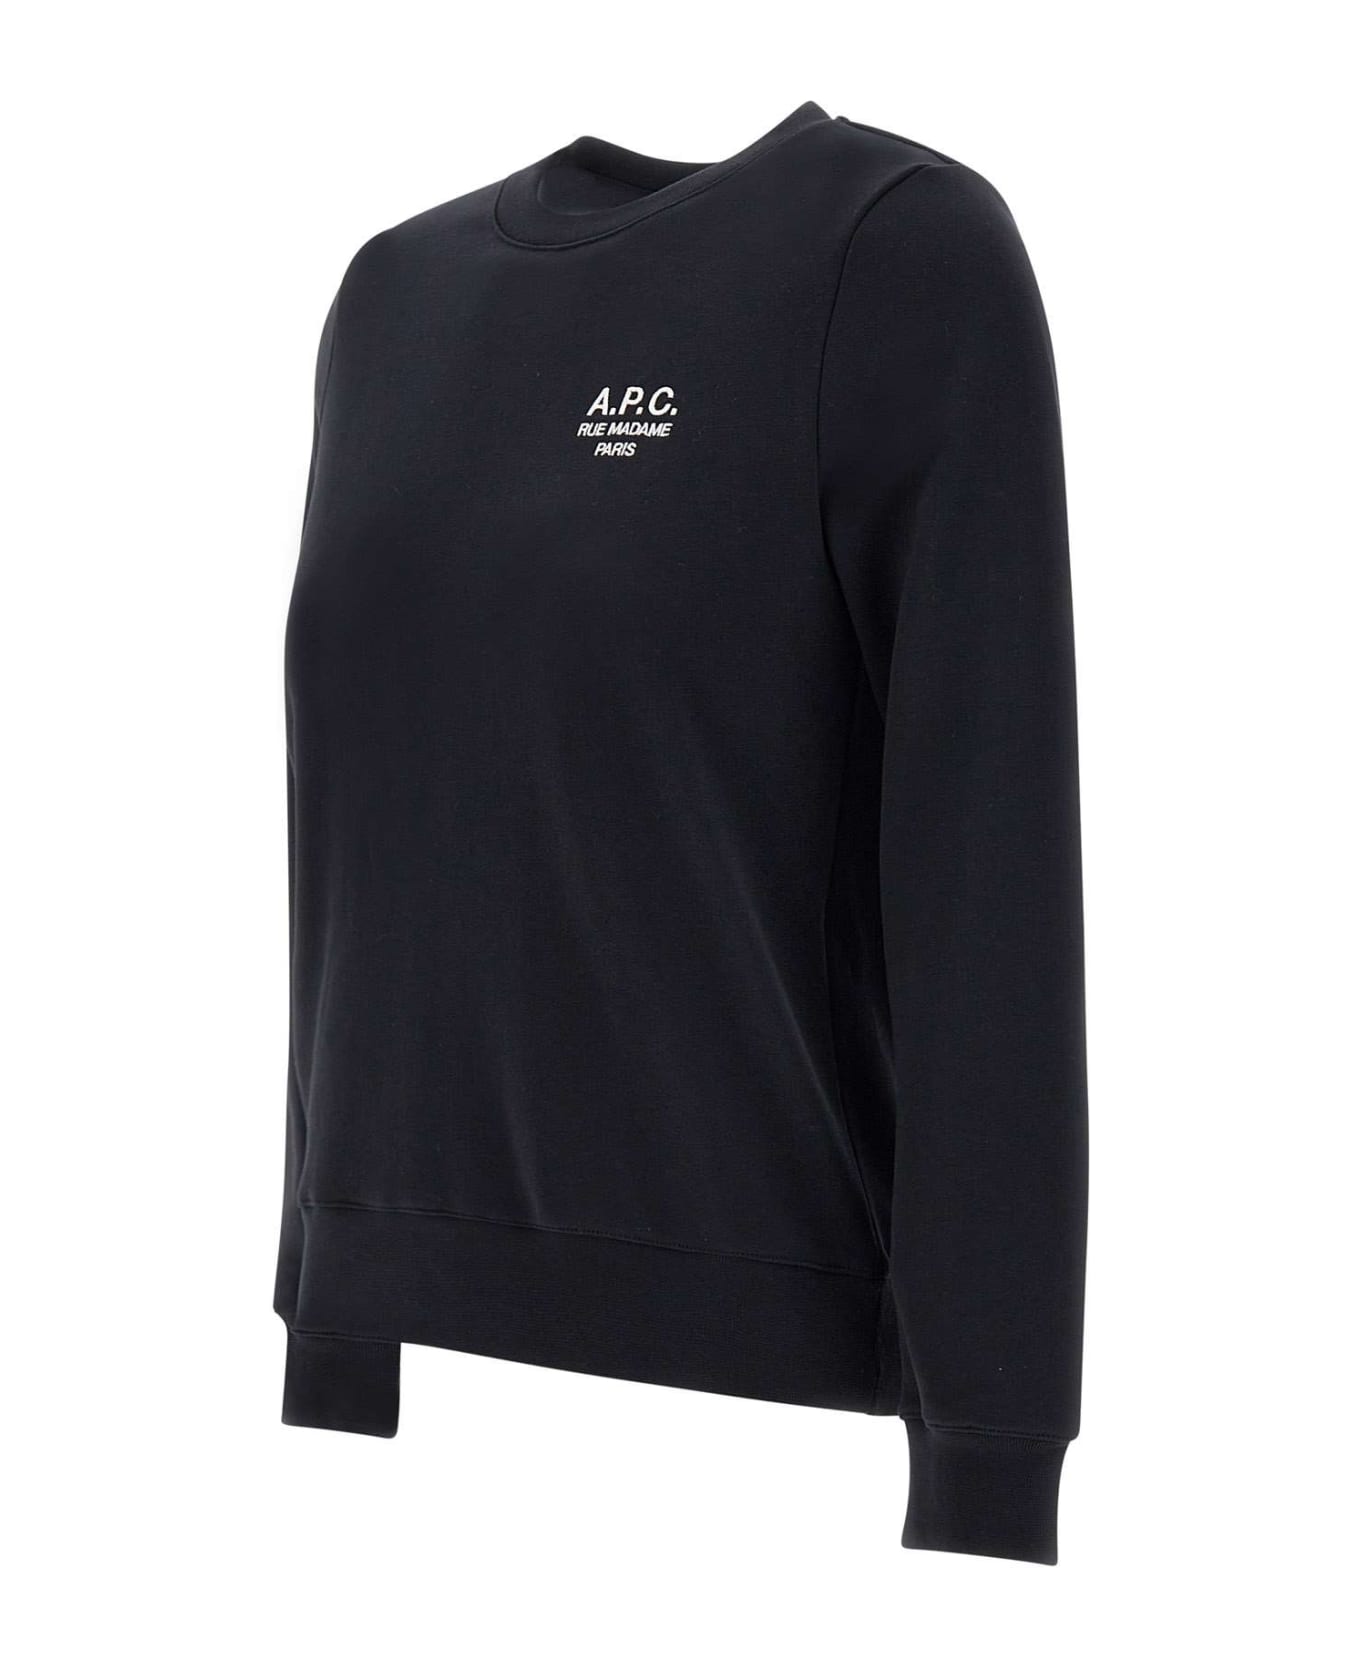 A.P.C. Skye Sweatshirt - BLACK